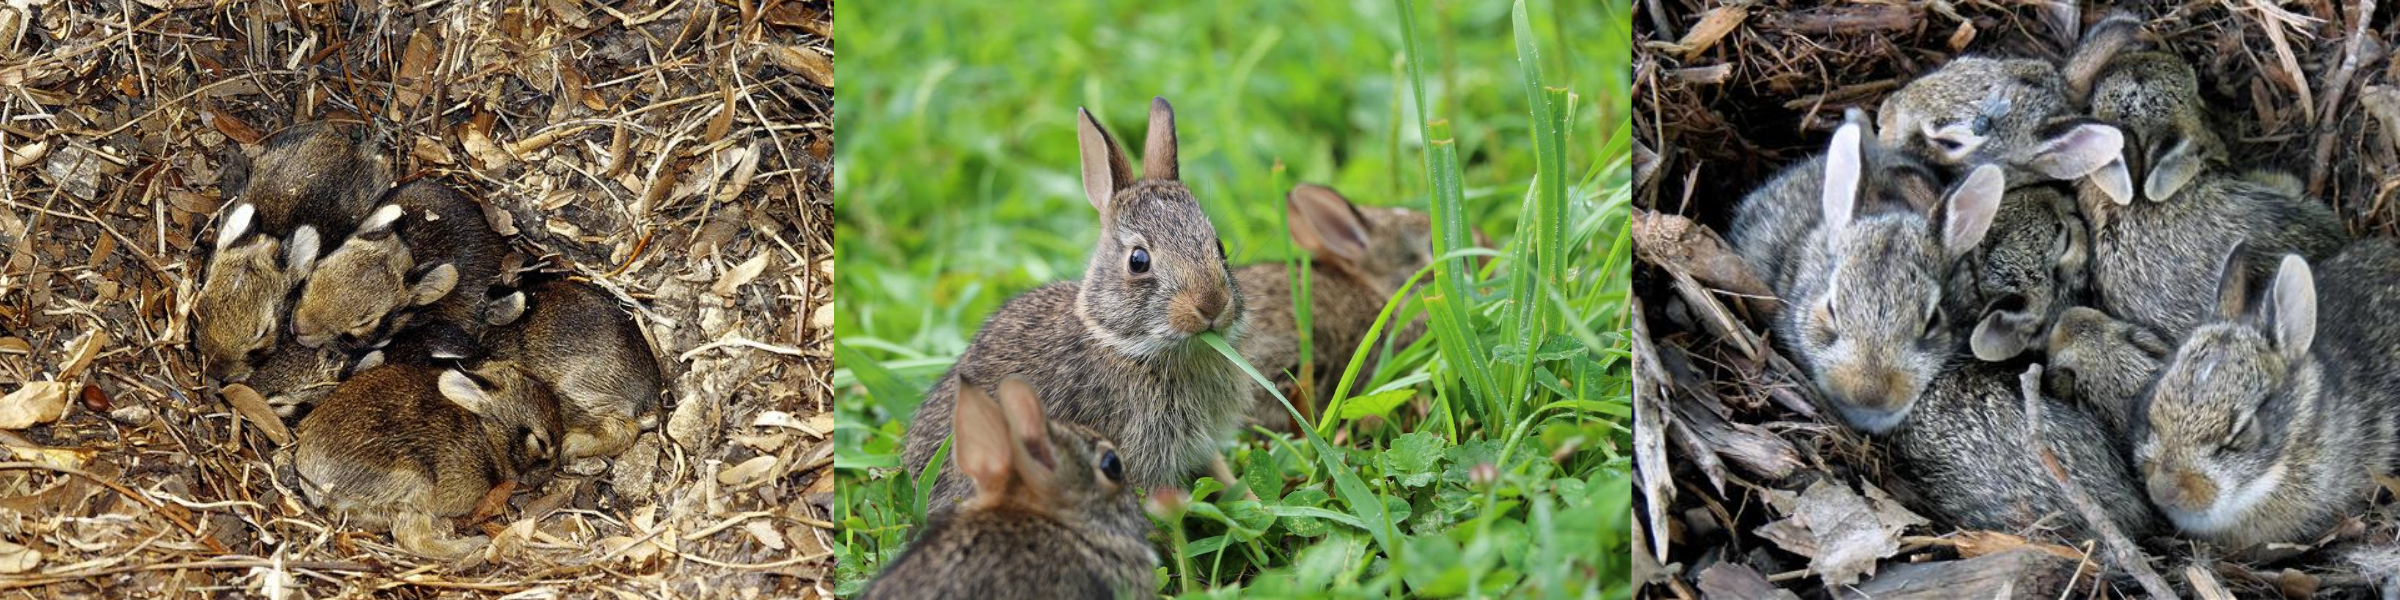 Caring For Orphan Baby Rabbits - House Rabbit Society